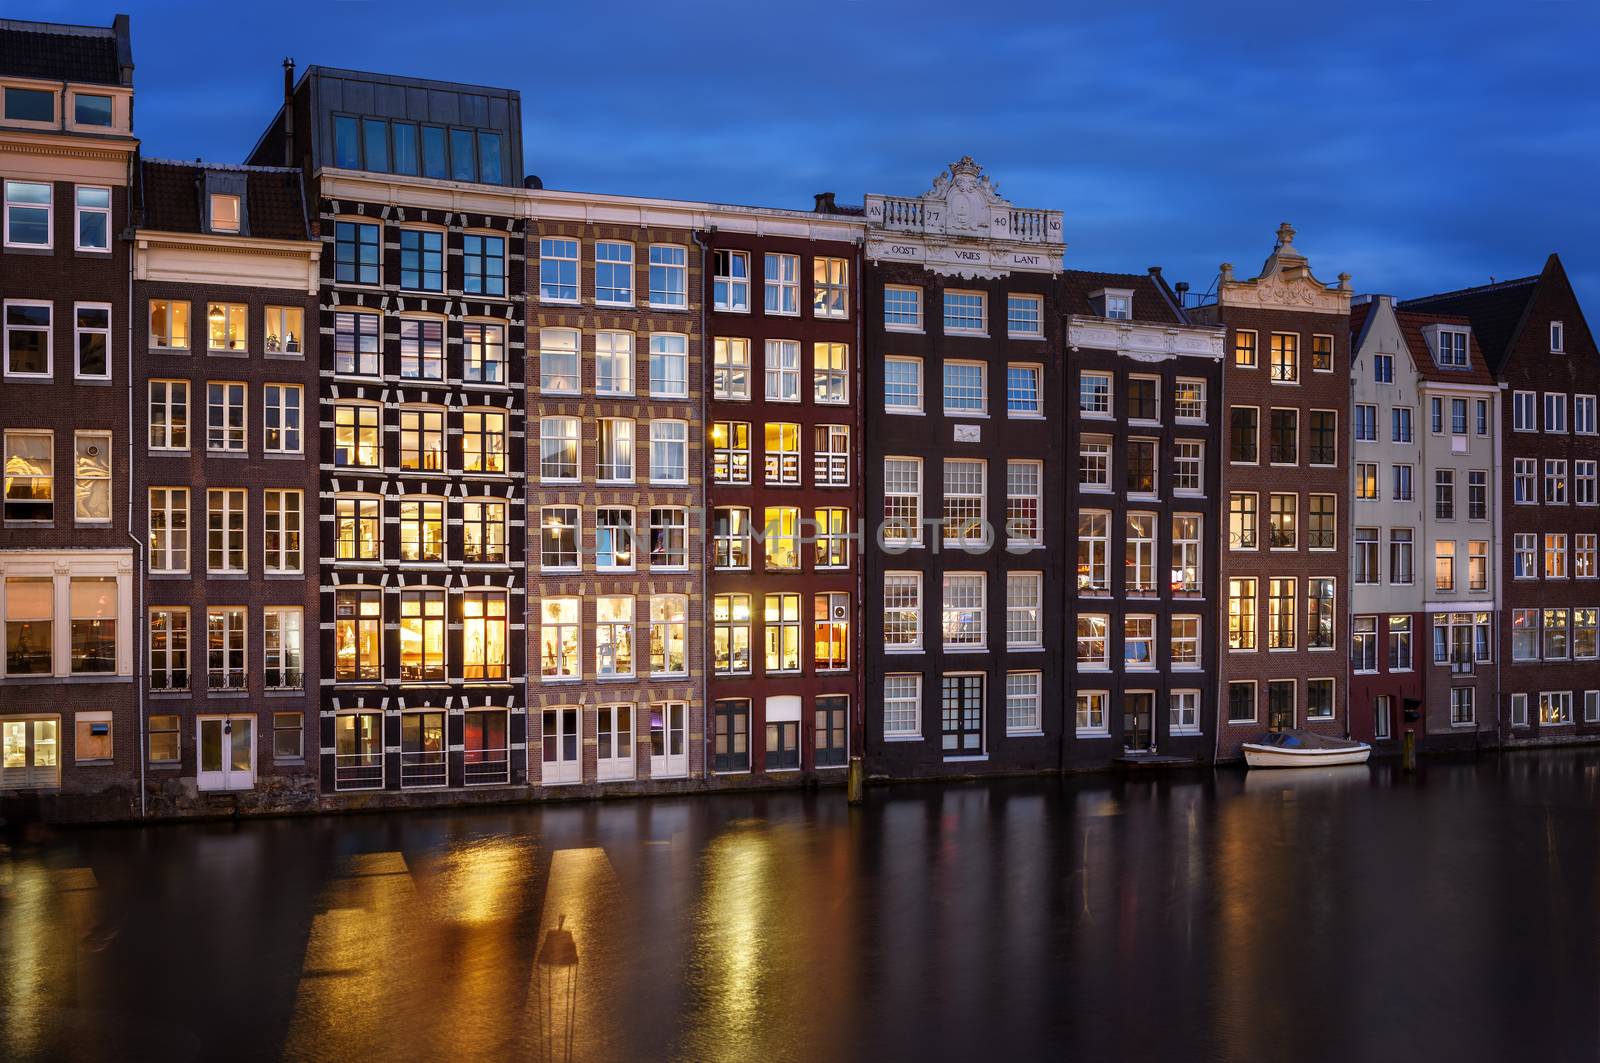 Amsterdam city by night by ventdusud